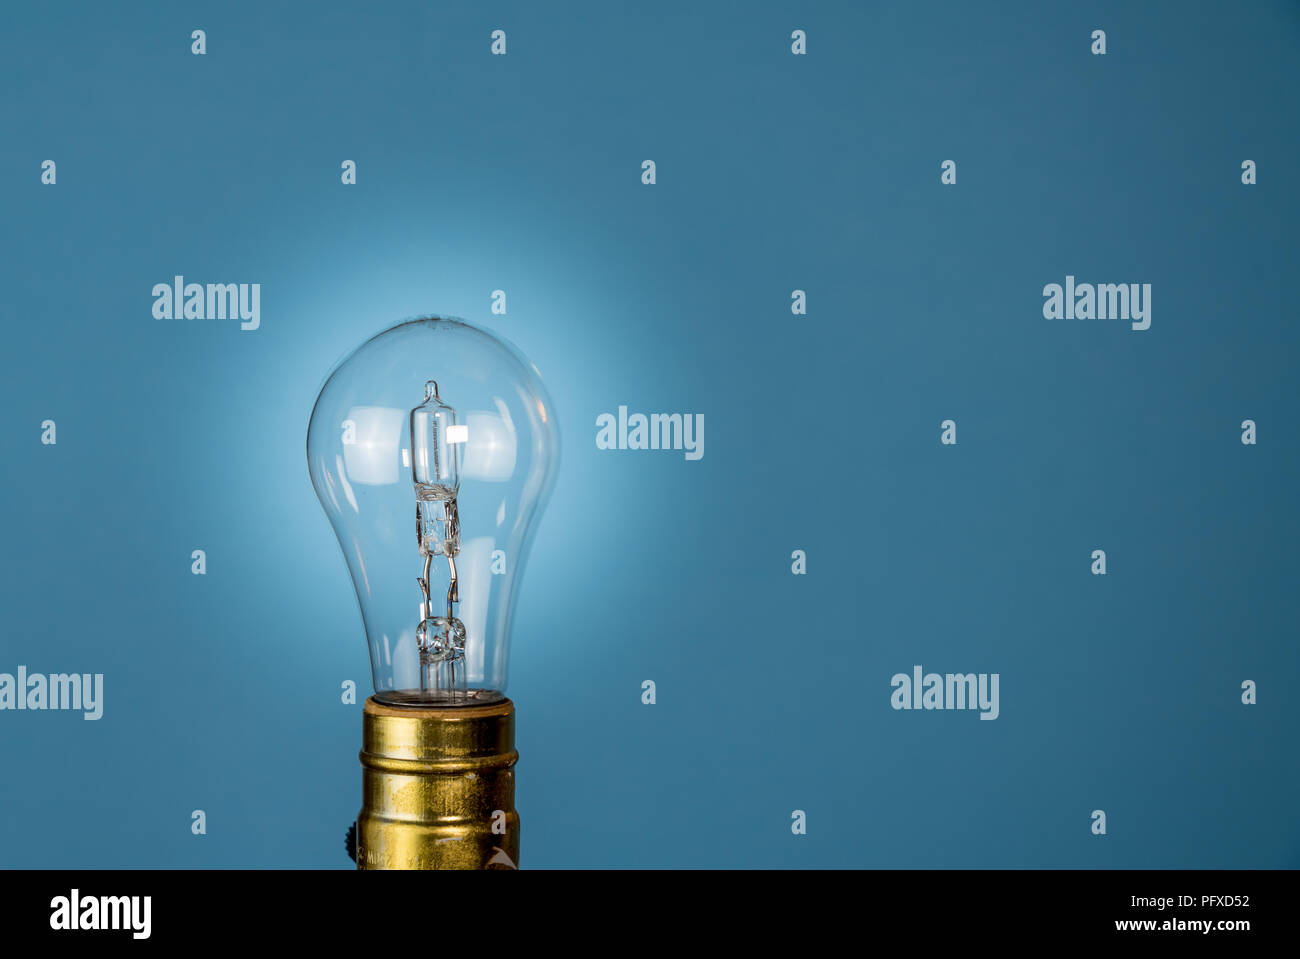 Halogen lightbulb against a blue background Stock Photo